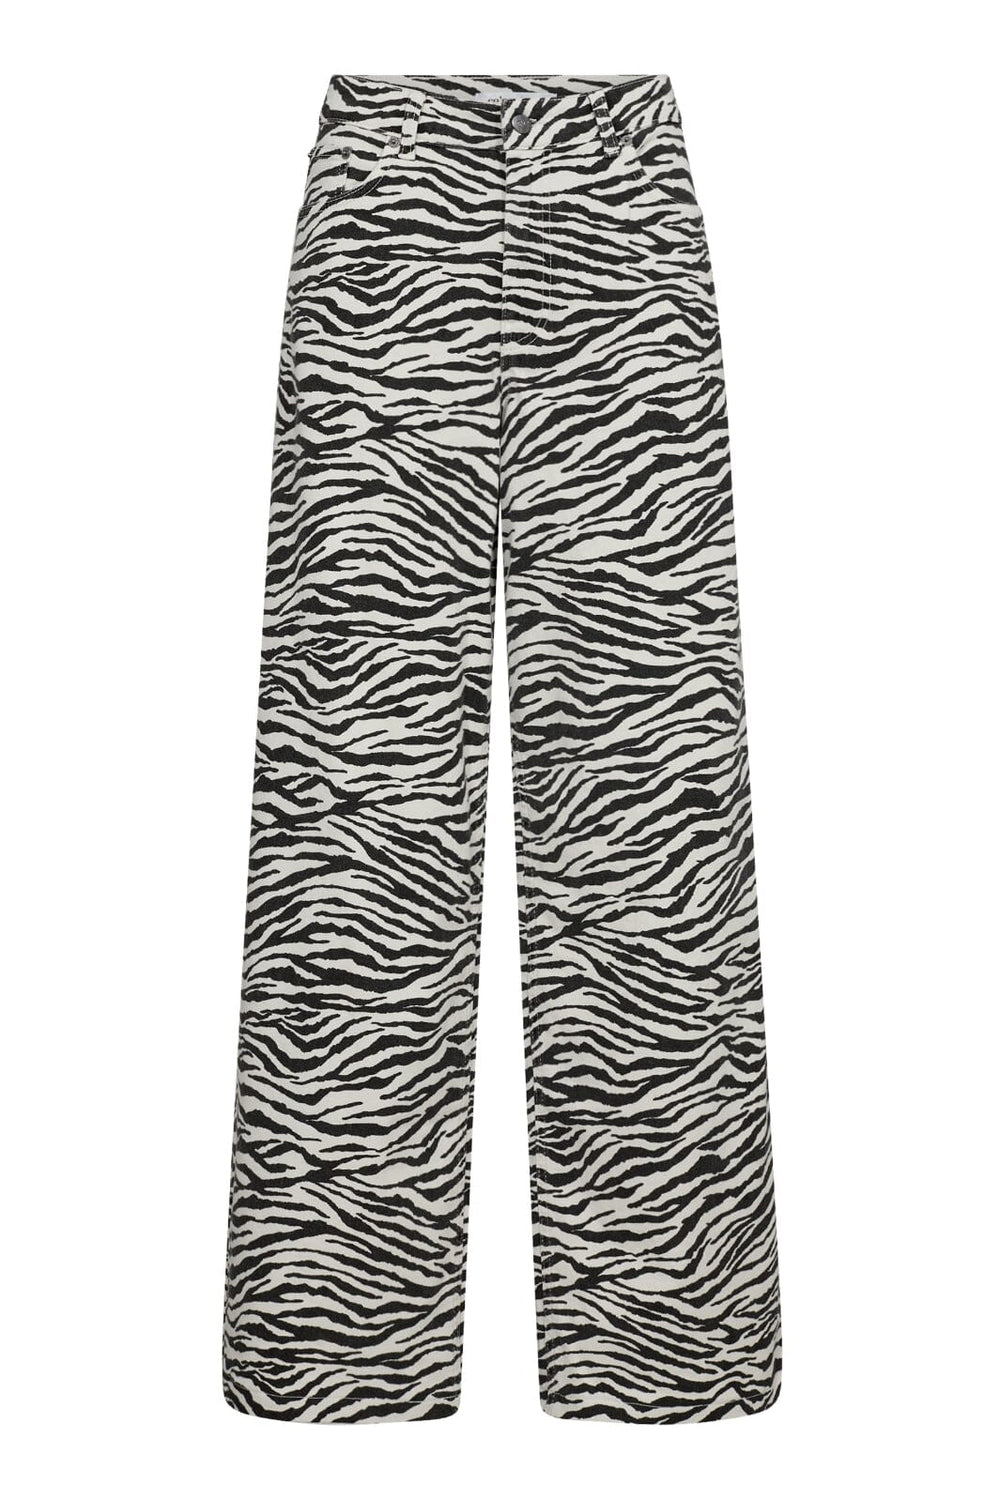 Forudbestilling - Co´couture - Zioncc Zebra Wide Pant 31355 - 1196 Offwhite-Black Bukser 